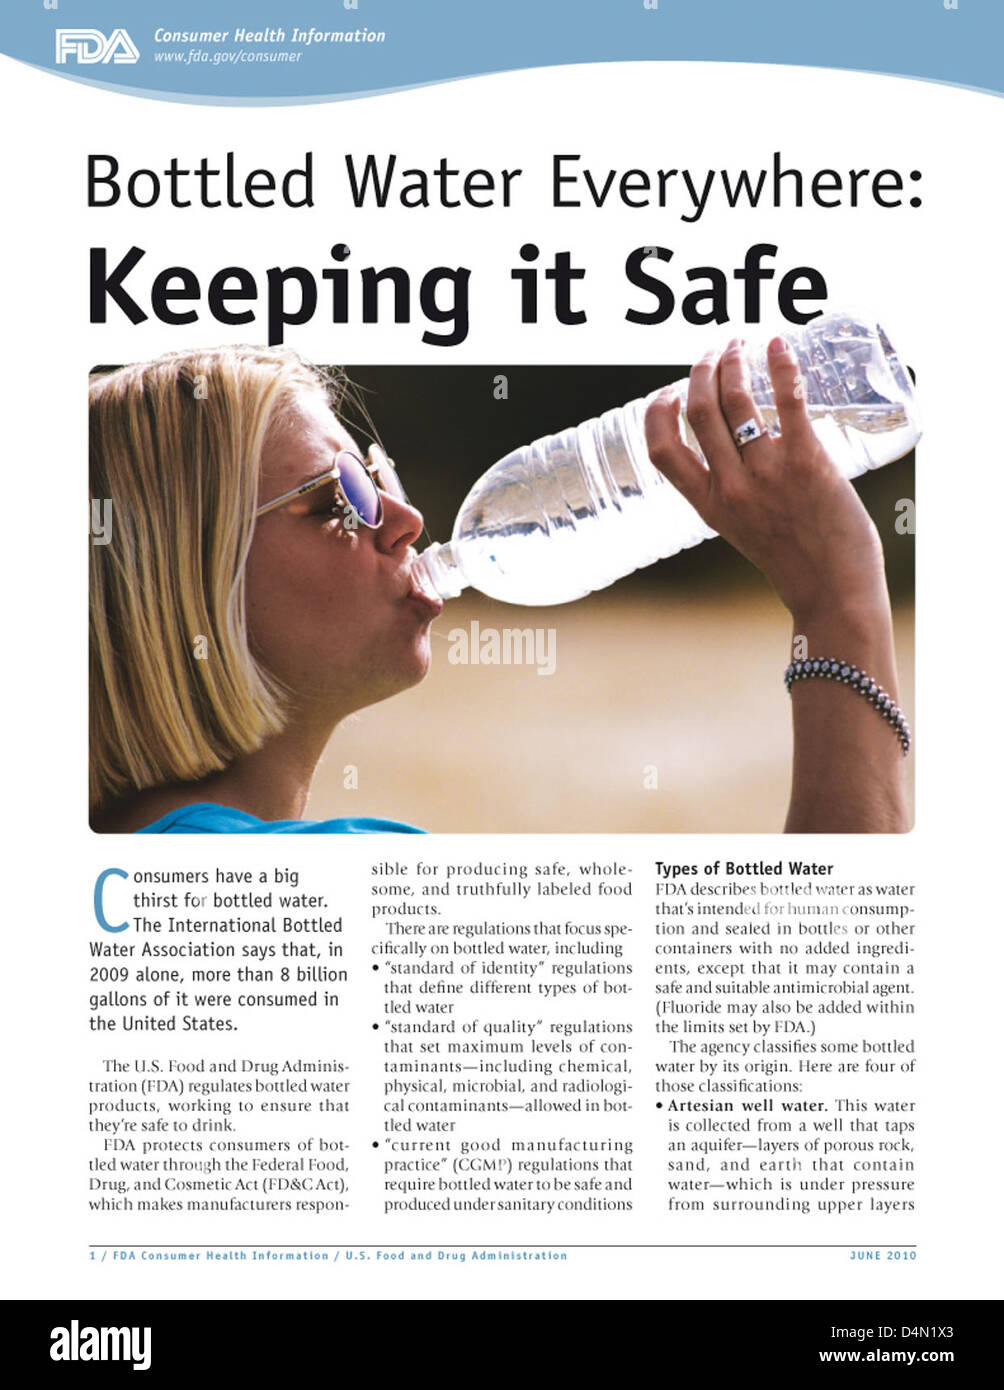 https://c8.alamy.com/comp/D4N1X3/bottled-water-everywhere-keeping-it-safe-D4N1X3.jpg